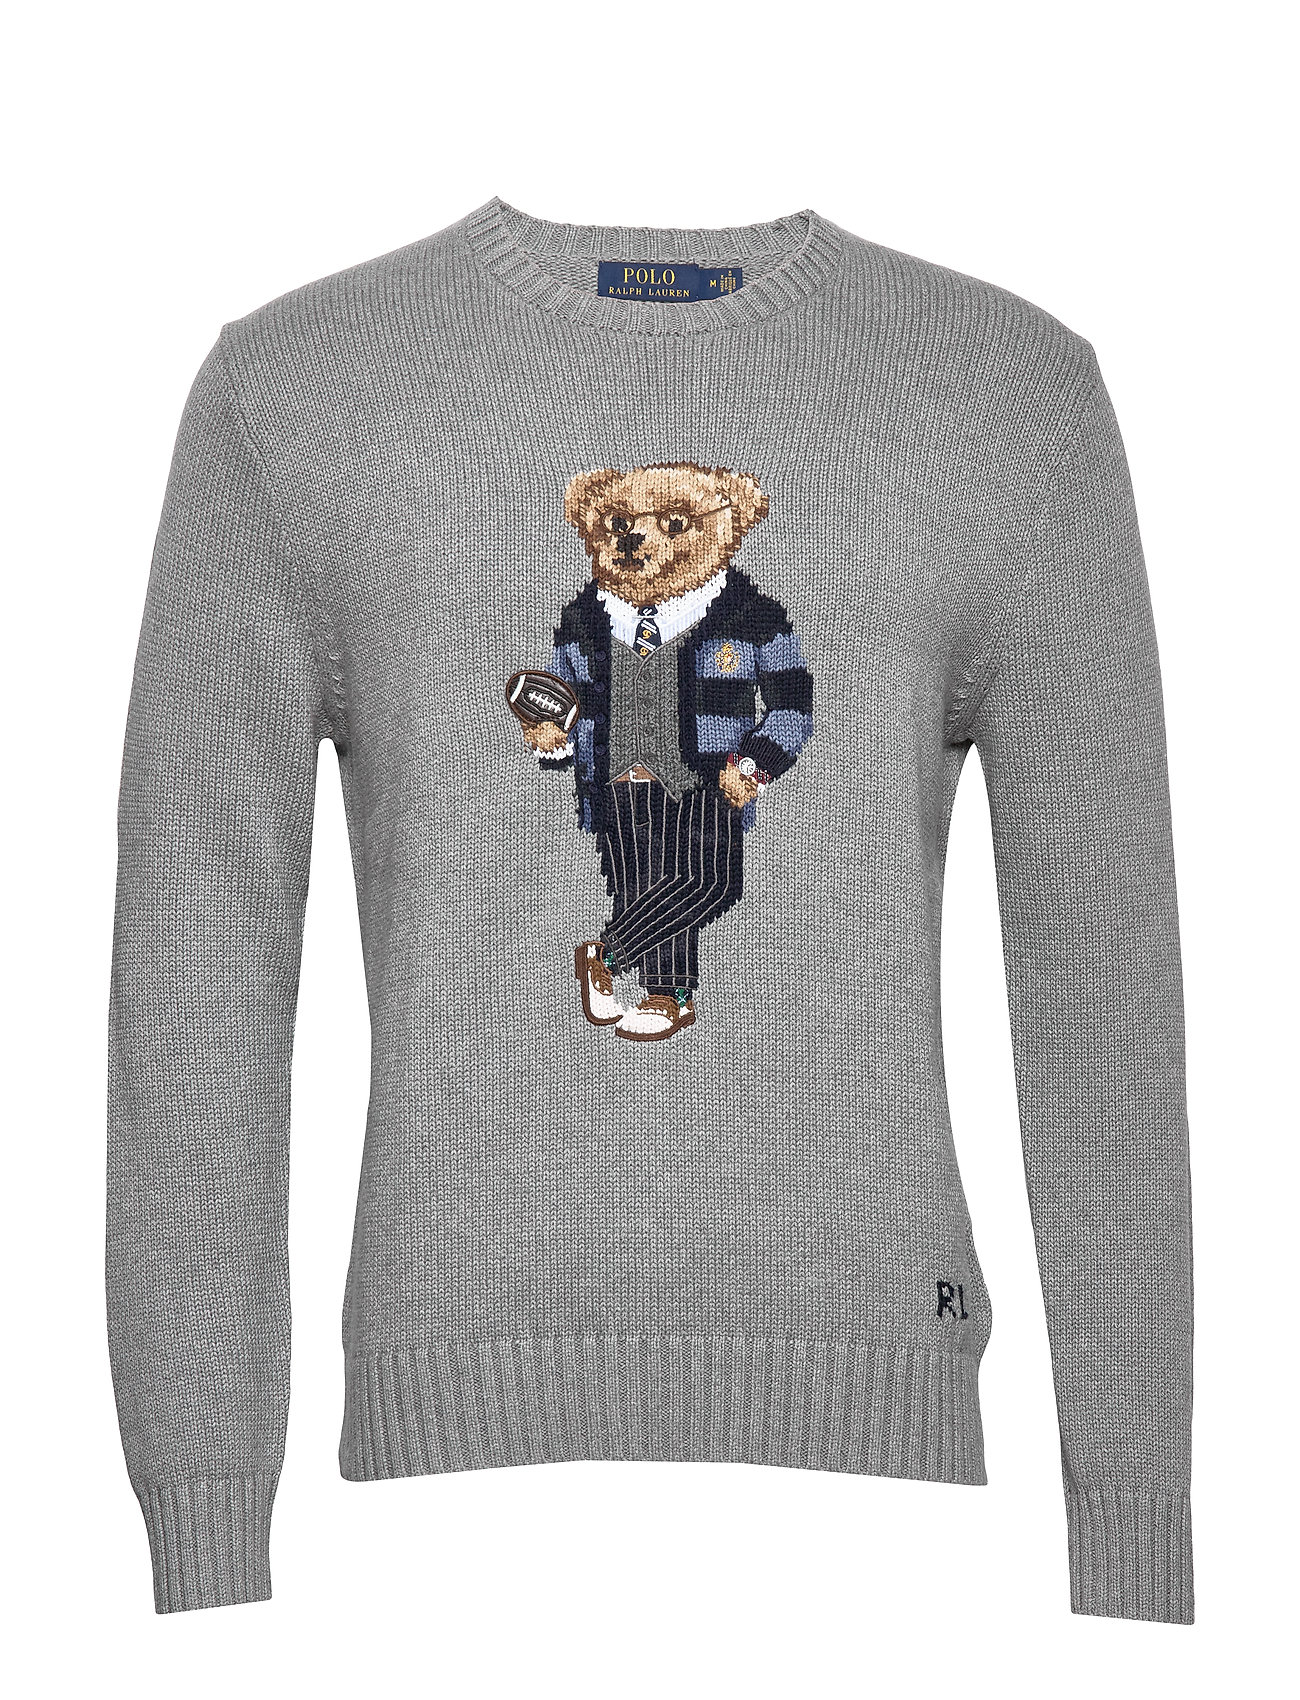 Polo Bear Cotton Sweater (Grey Heather 